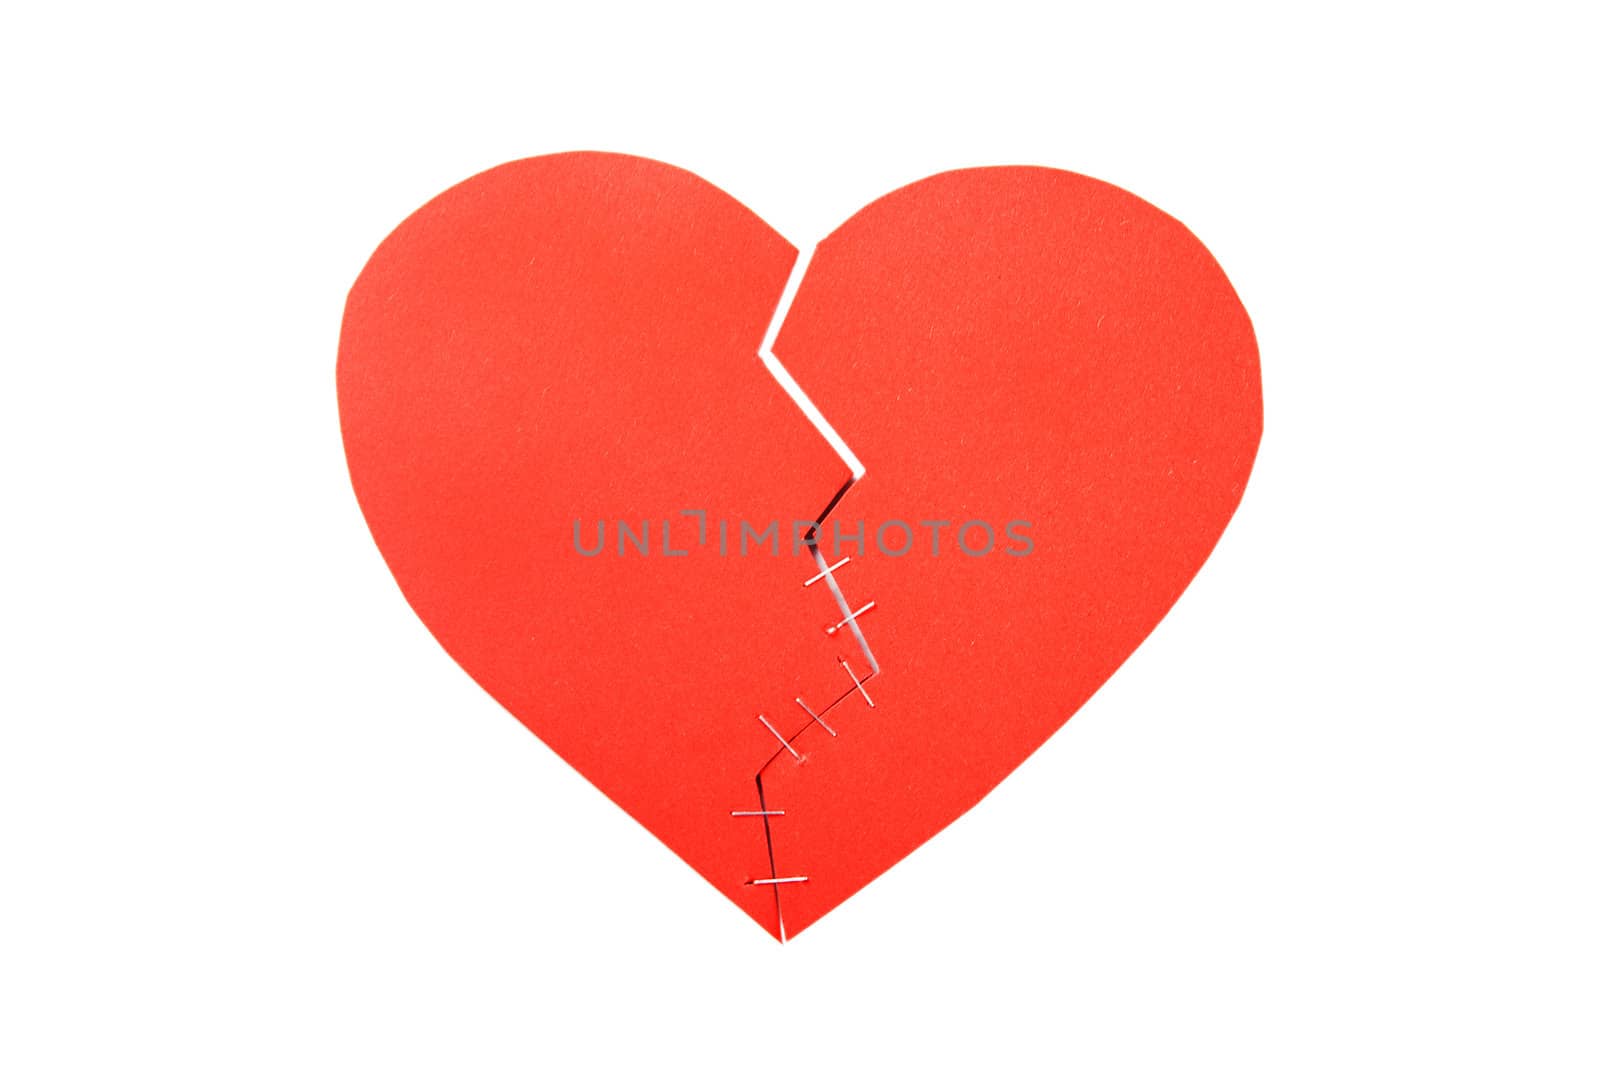 Broken cardboard heart isolated on white background by Irina1977